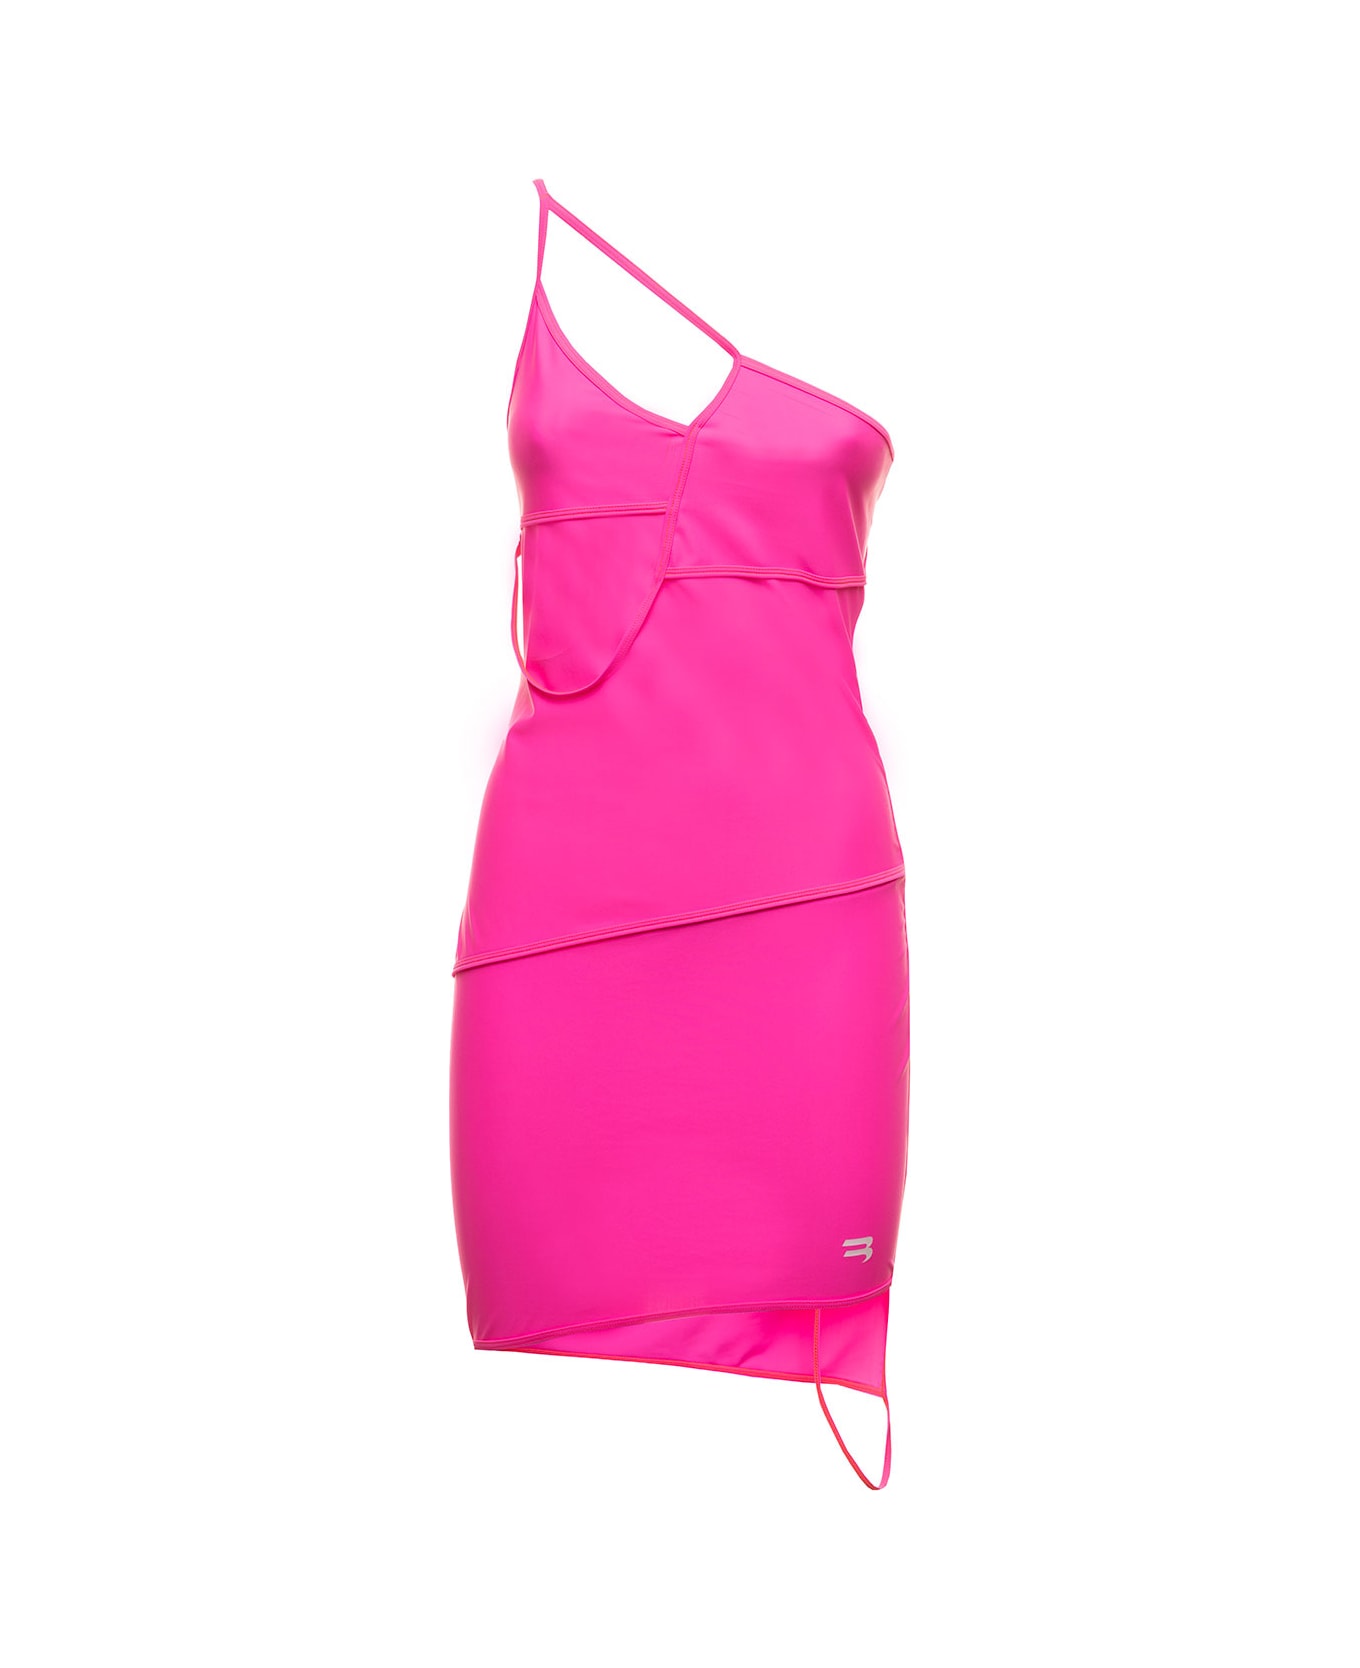 Balenciaga Mat Spandex One Shoulder Stretch Fabric Pink Dress Blaneciaga Woman - Pink